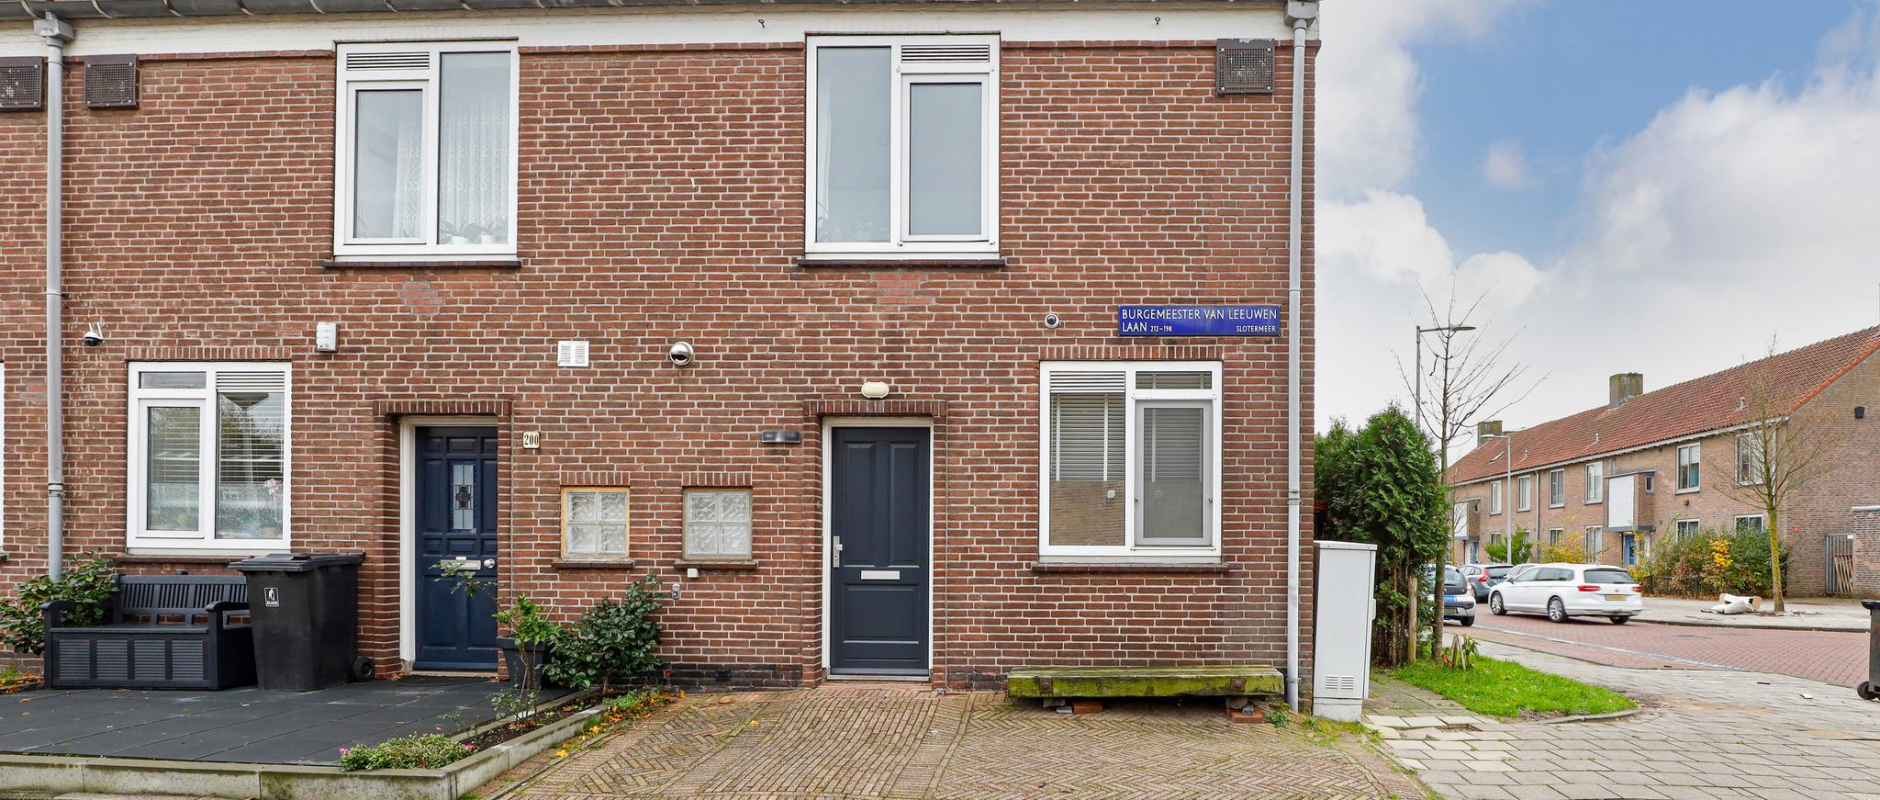 Woning te koop aan de Burgemeester Van Leeuwenlaan 198 te Amsterdam